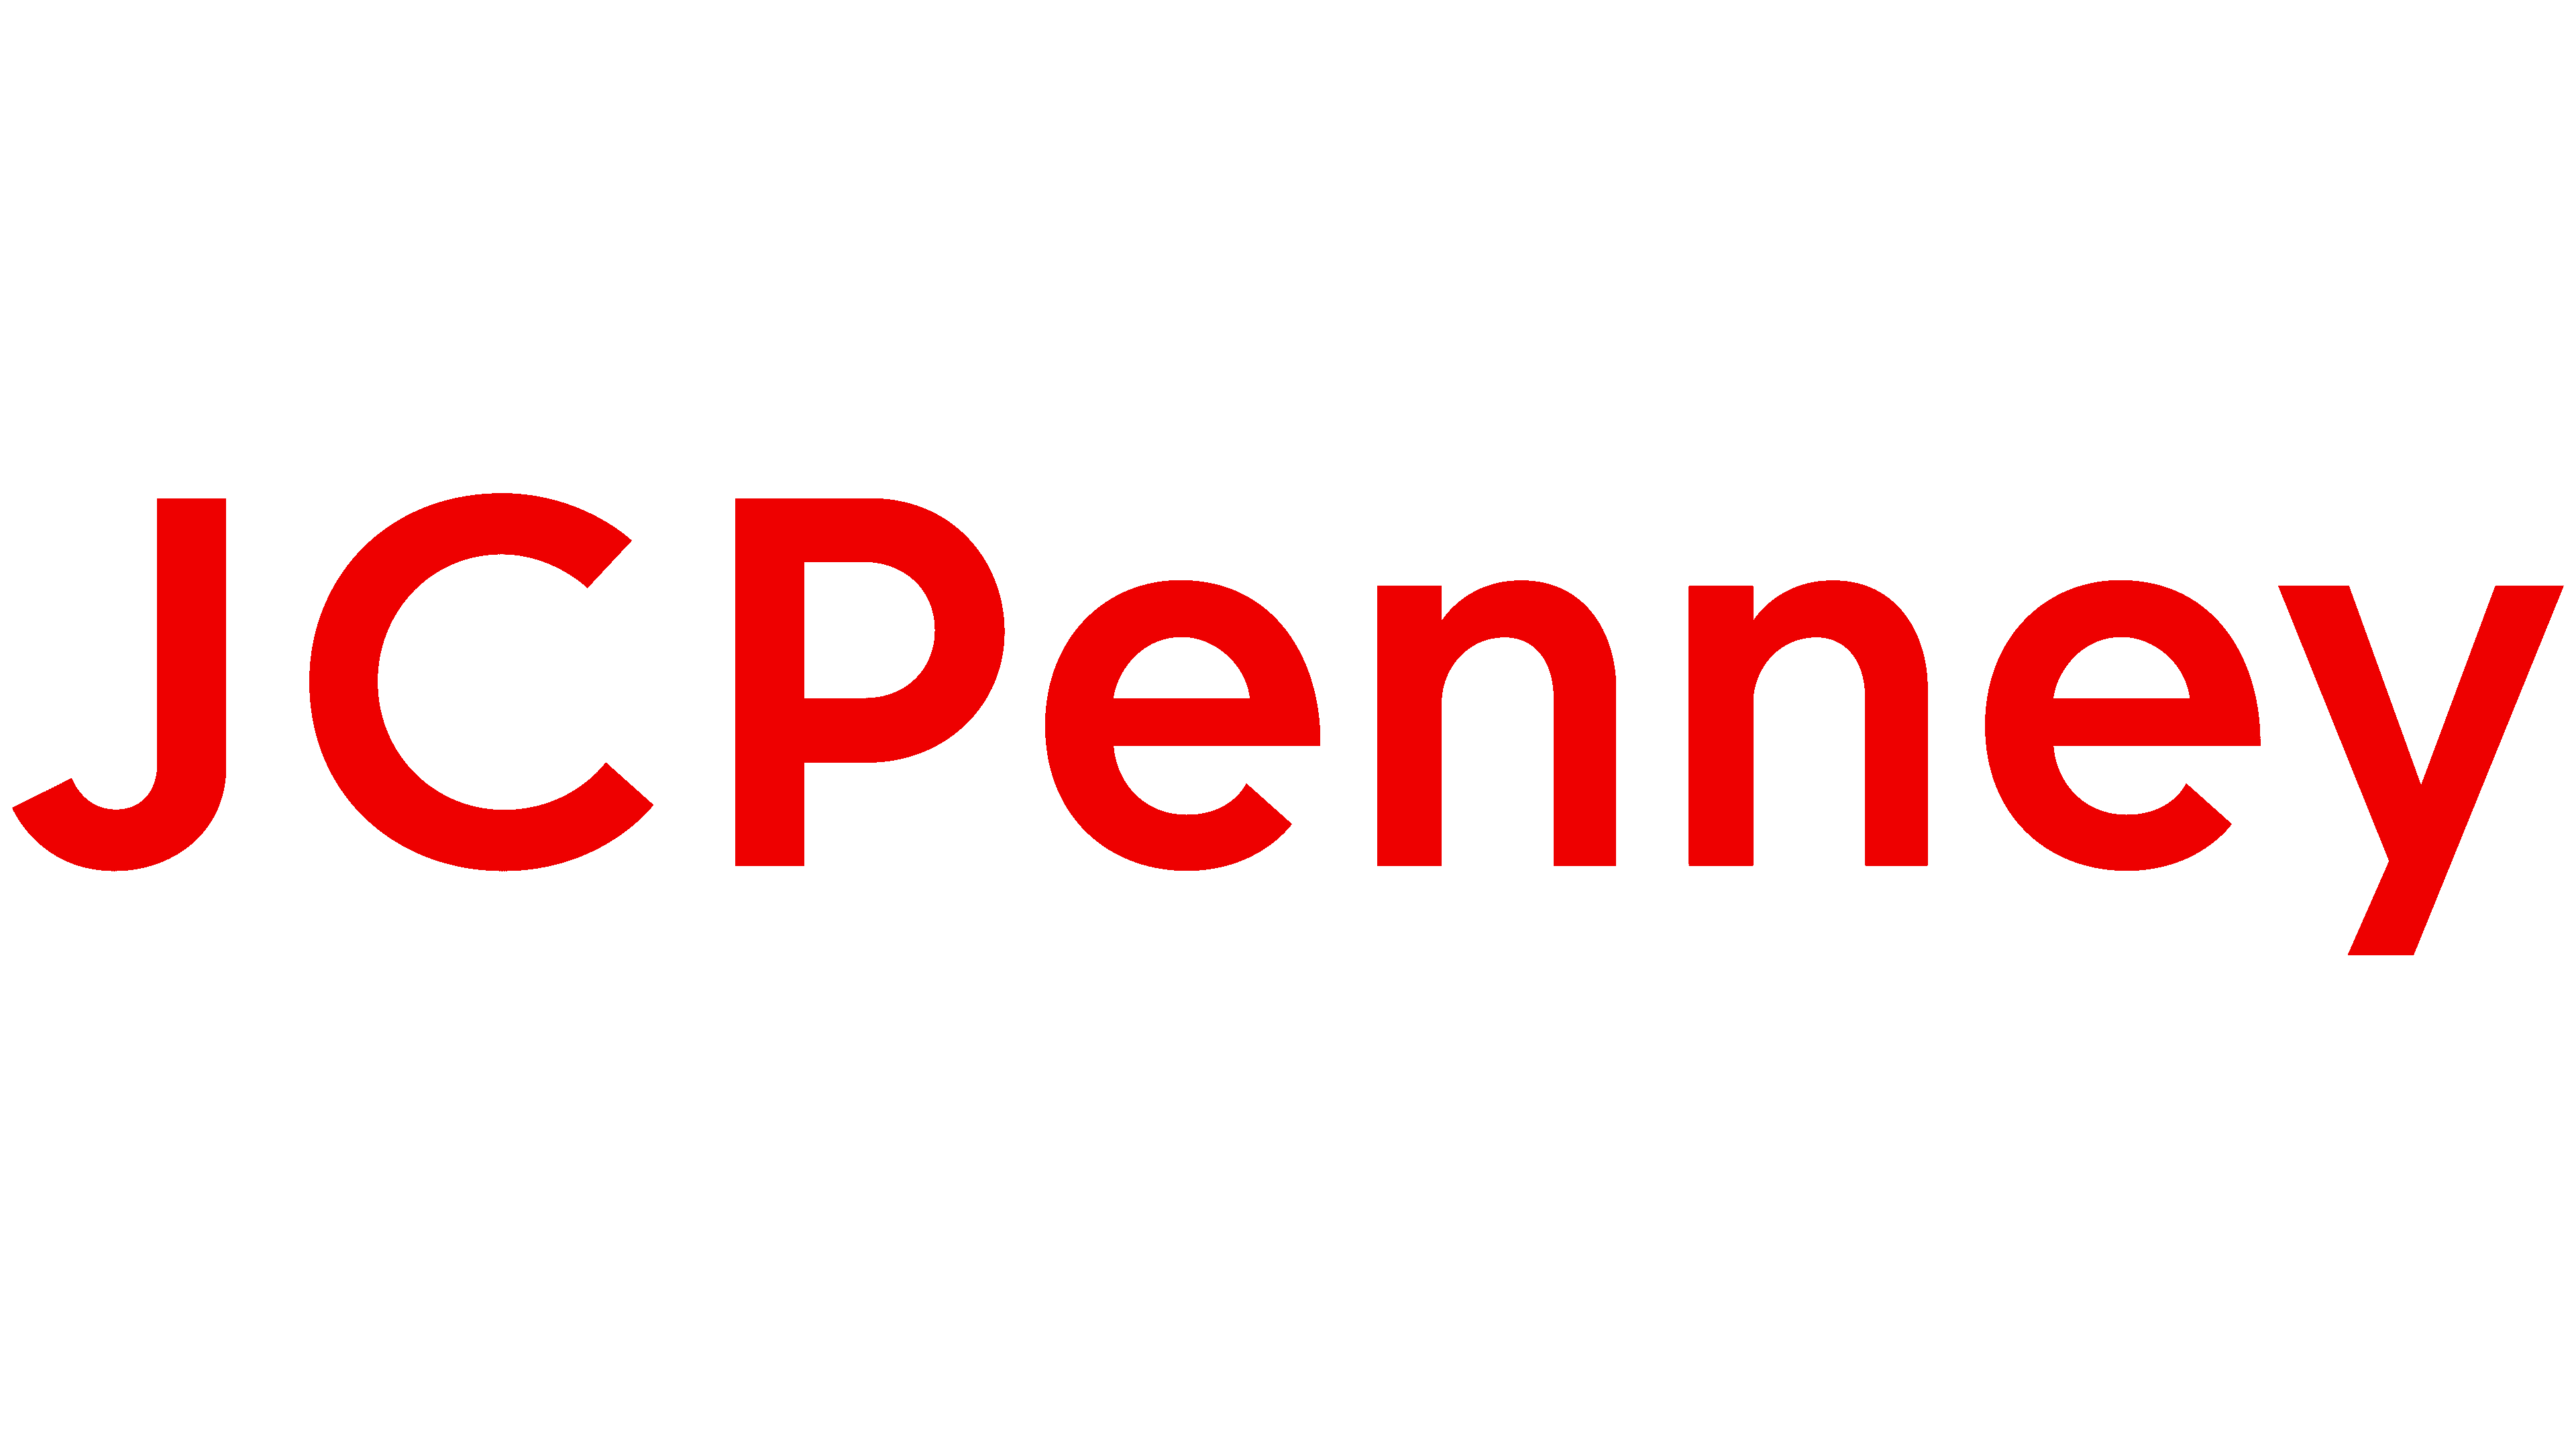 https://logos-world.net/wp-content/uploads/2022/01/JCPenney-Logo.png